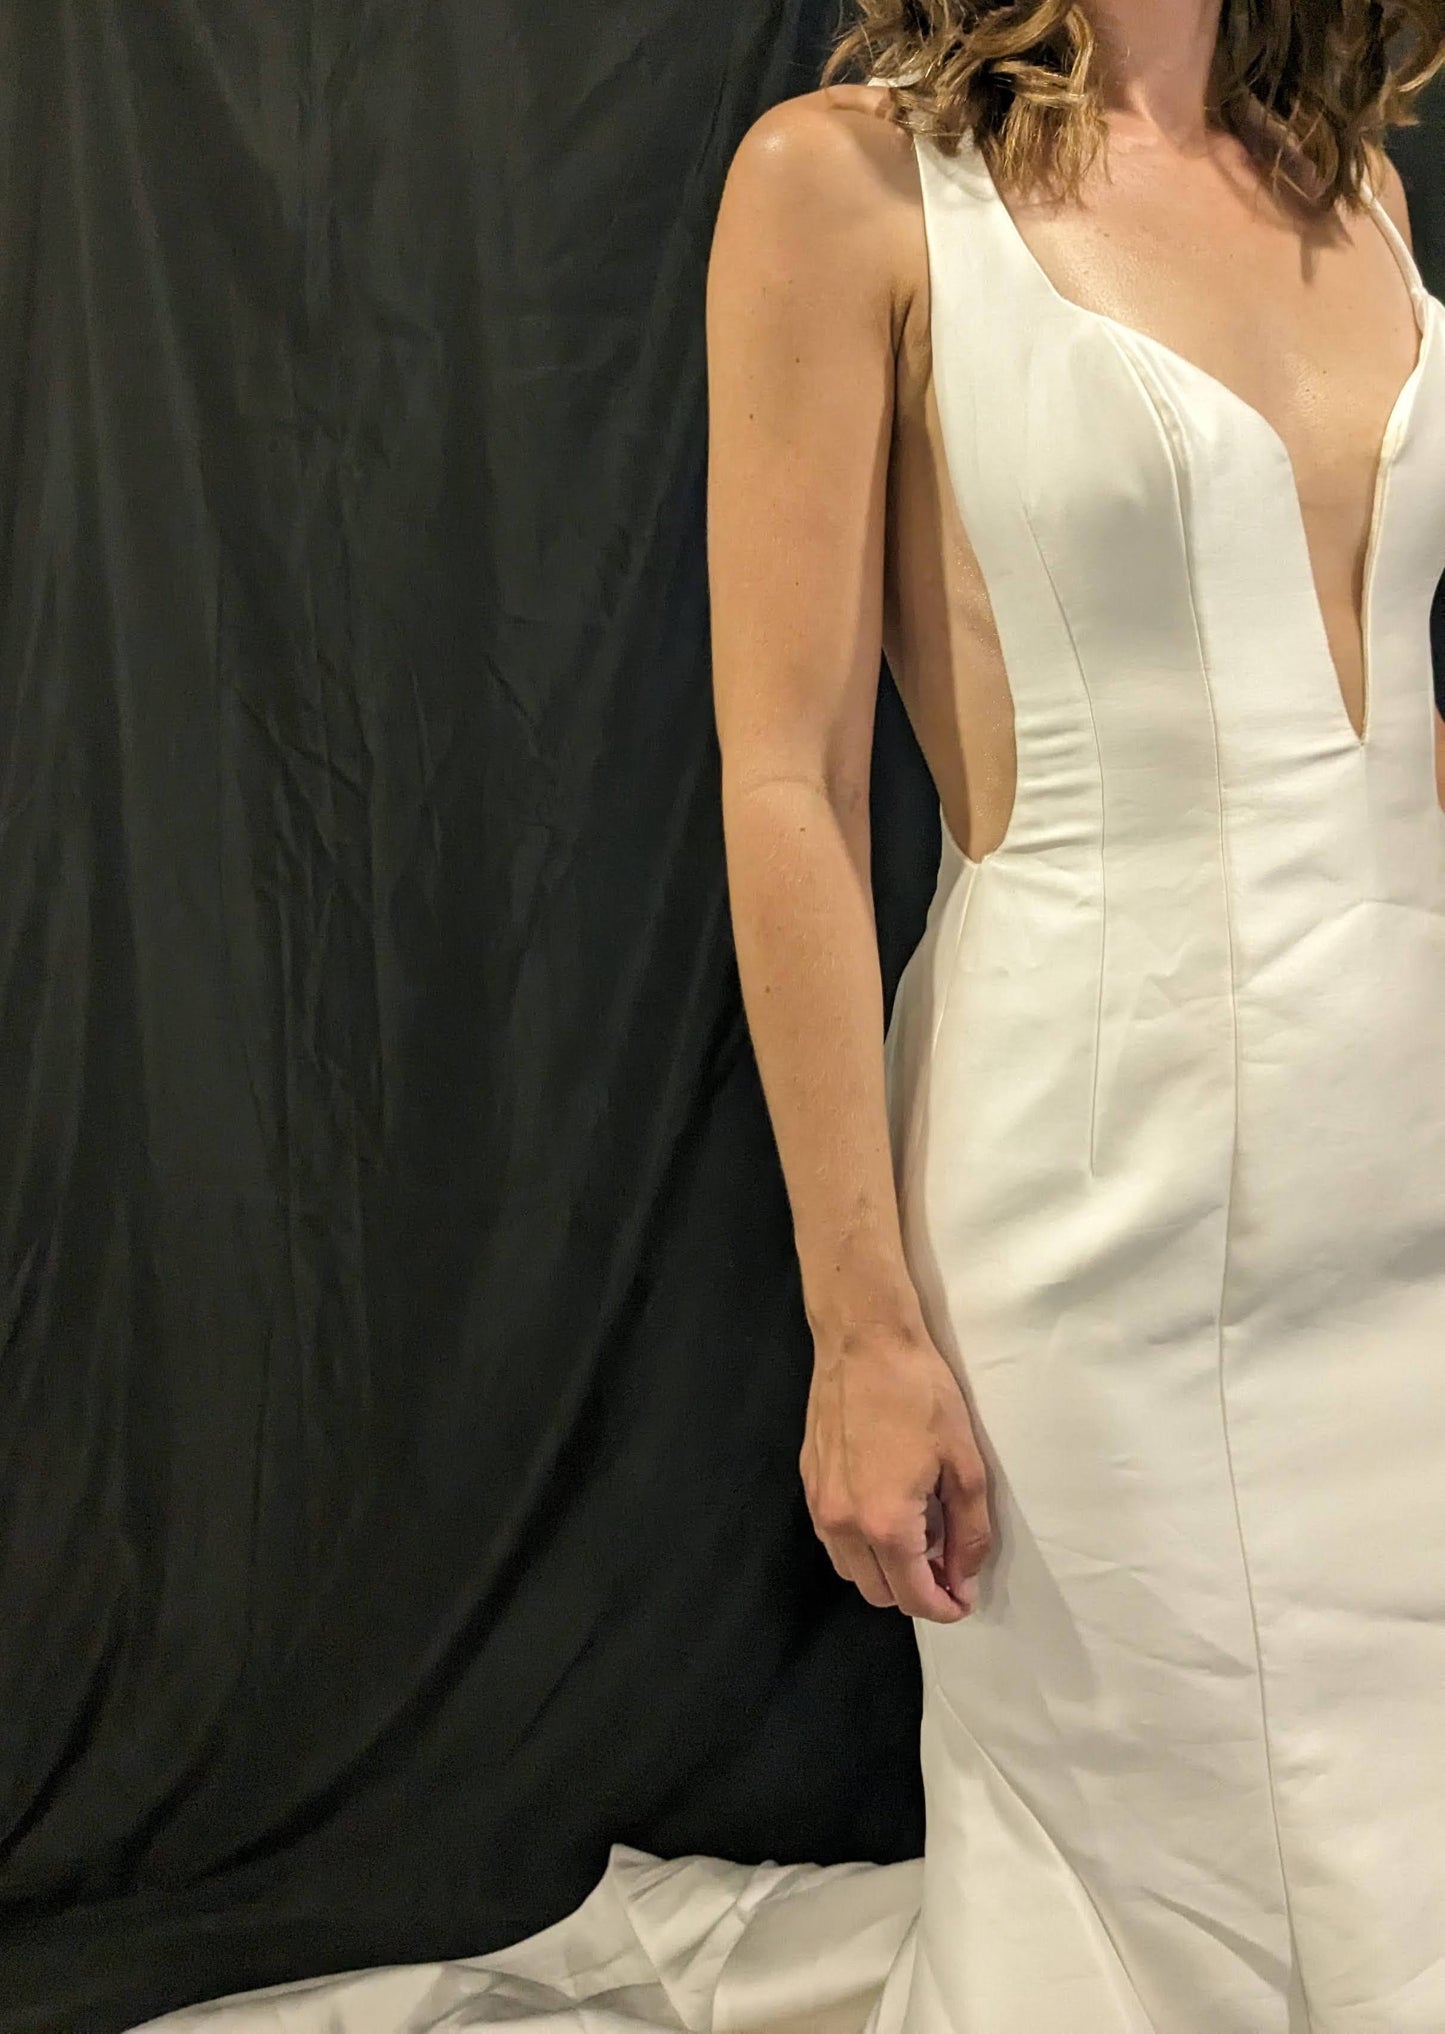 Dress 4791: Private Designer "Elvira" waist 26